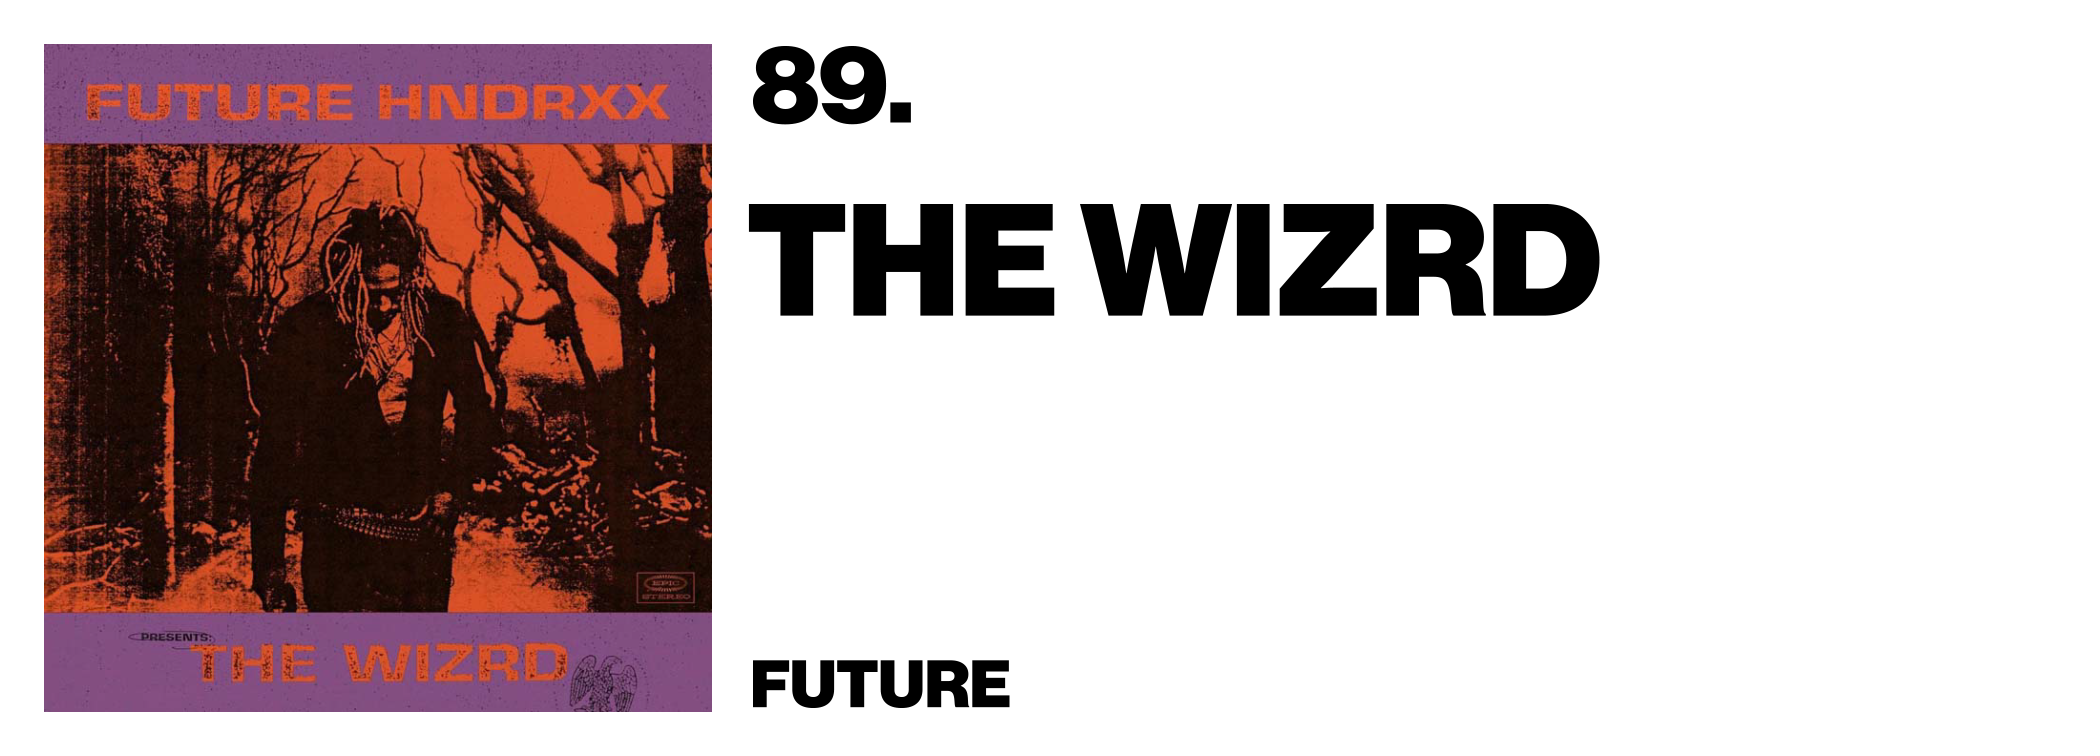 future the wizrd full